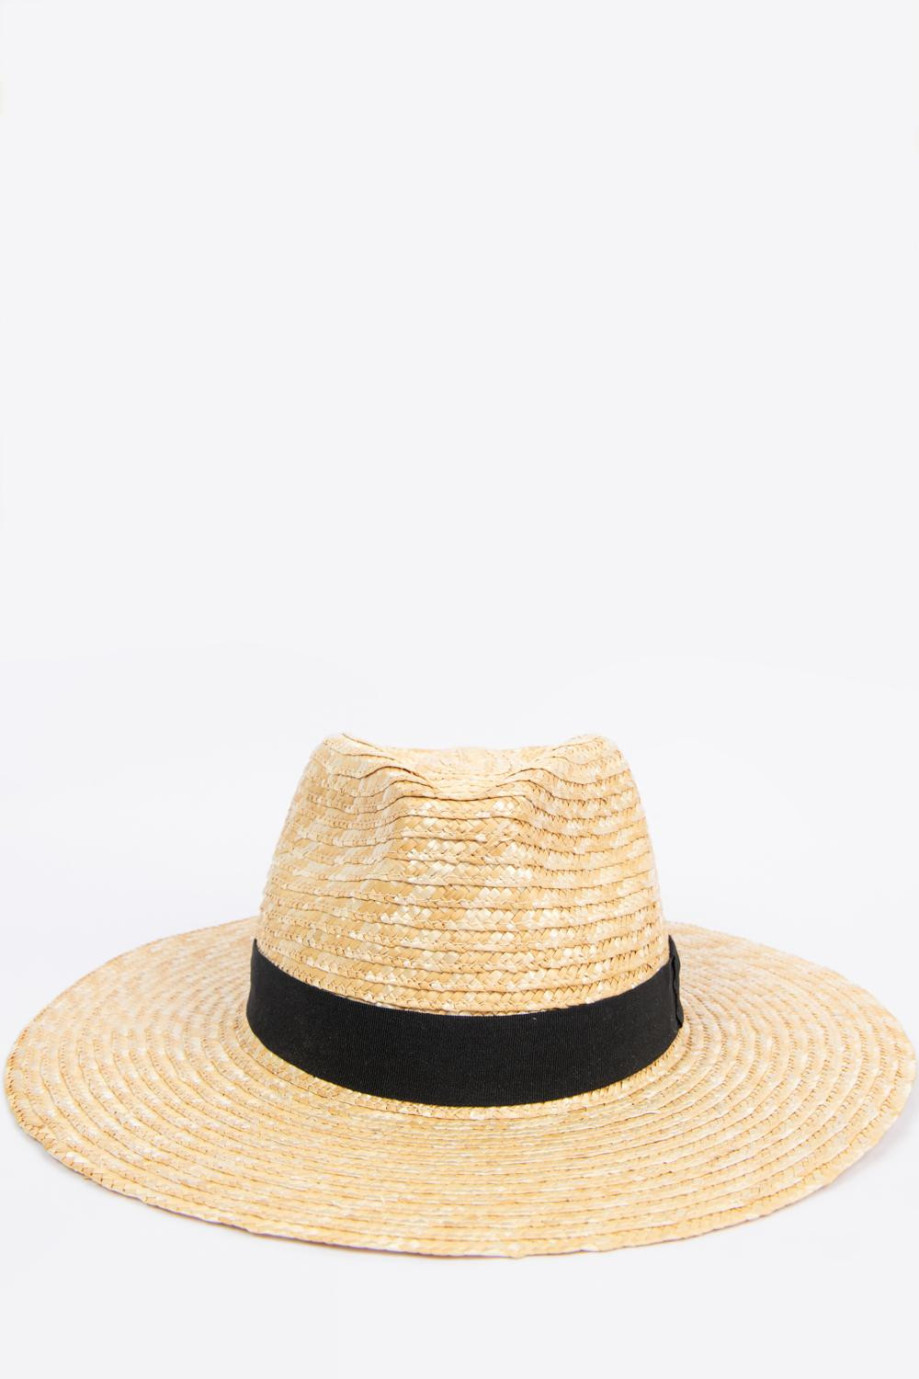 Sombrero kaky claro con cinta negra y ala ancha plana